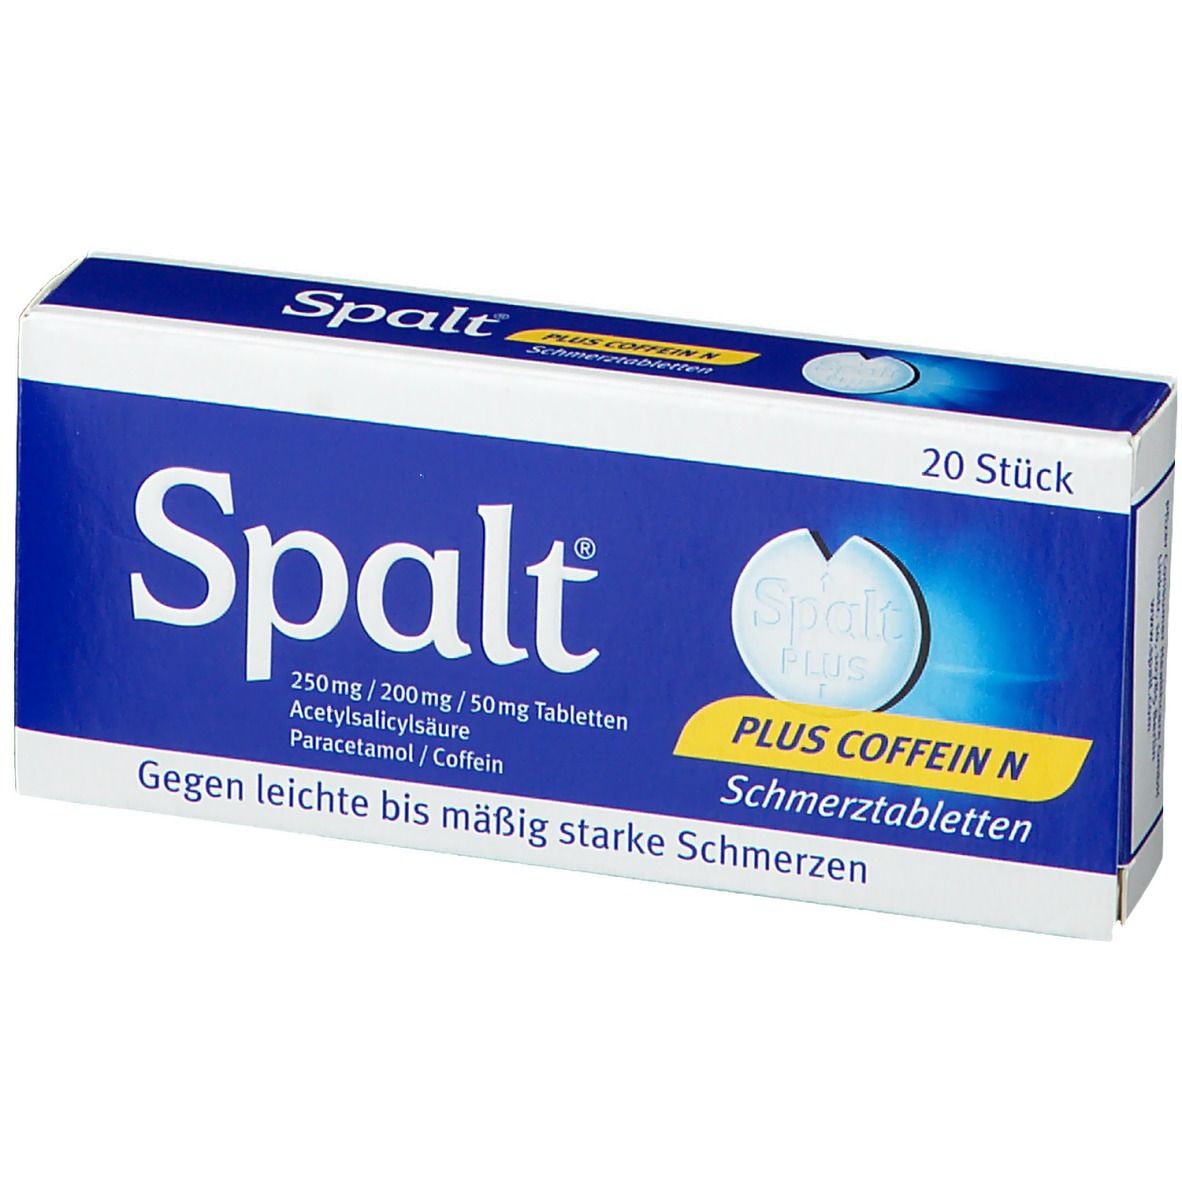 Spalt® Plus Coffein N